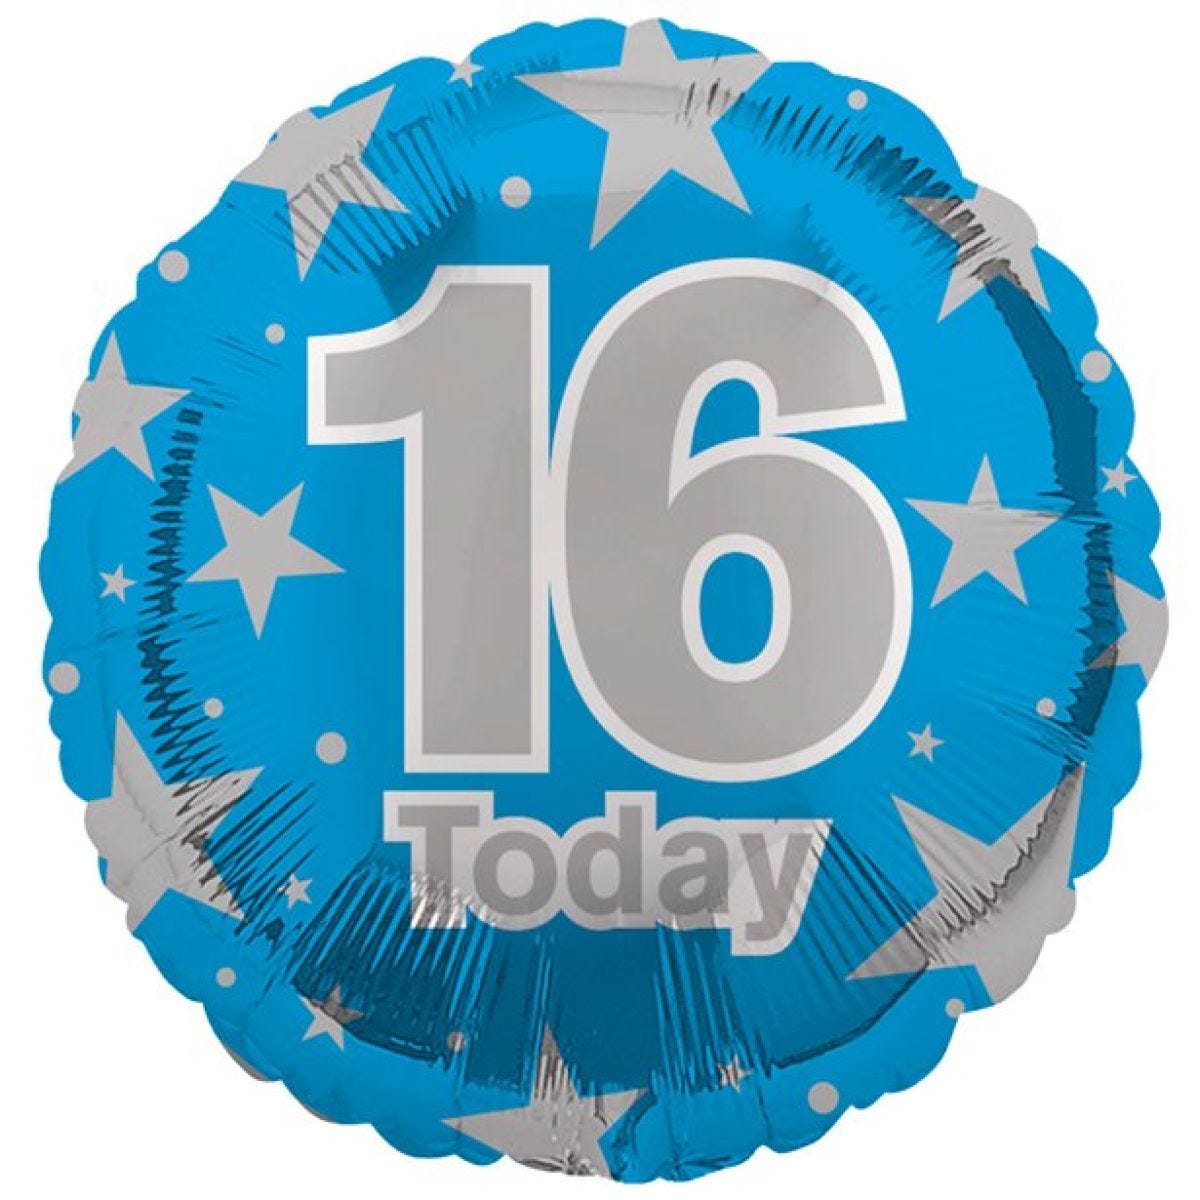 16th Blue Birthday Balloon - 18" Foil